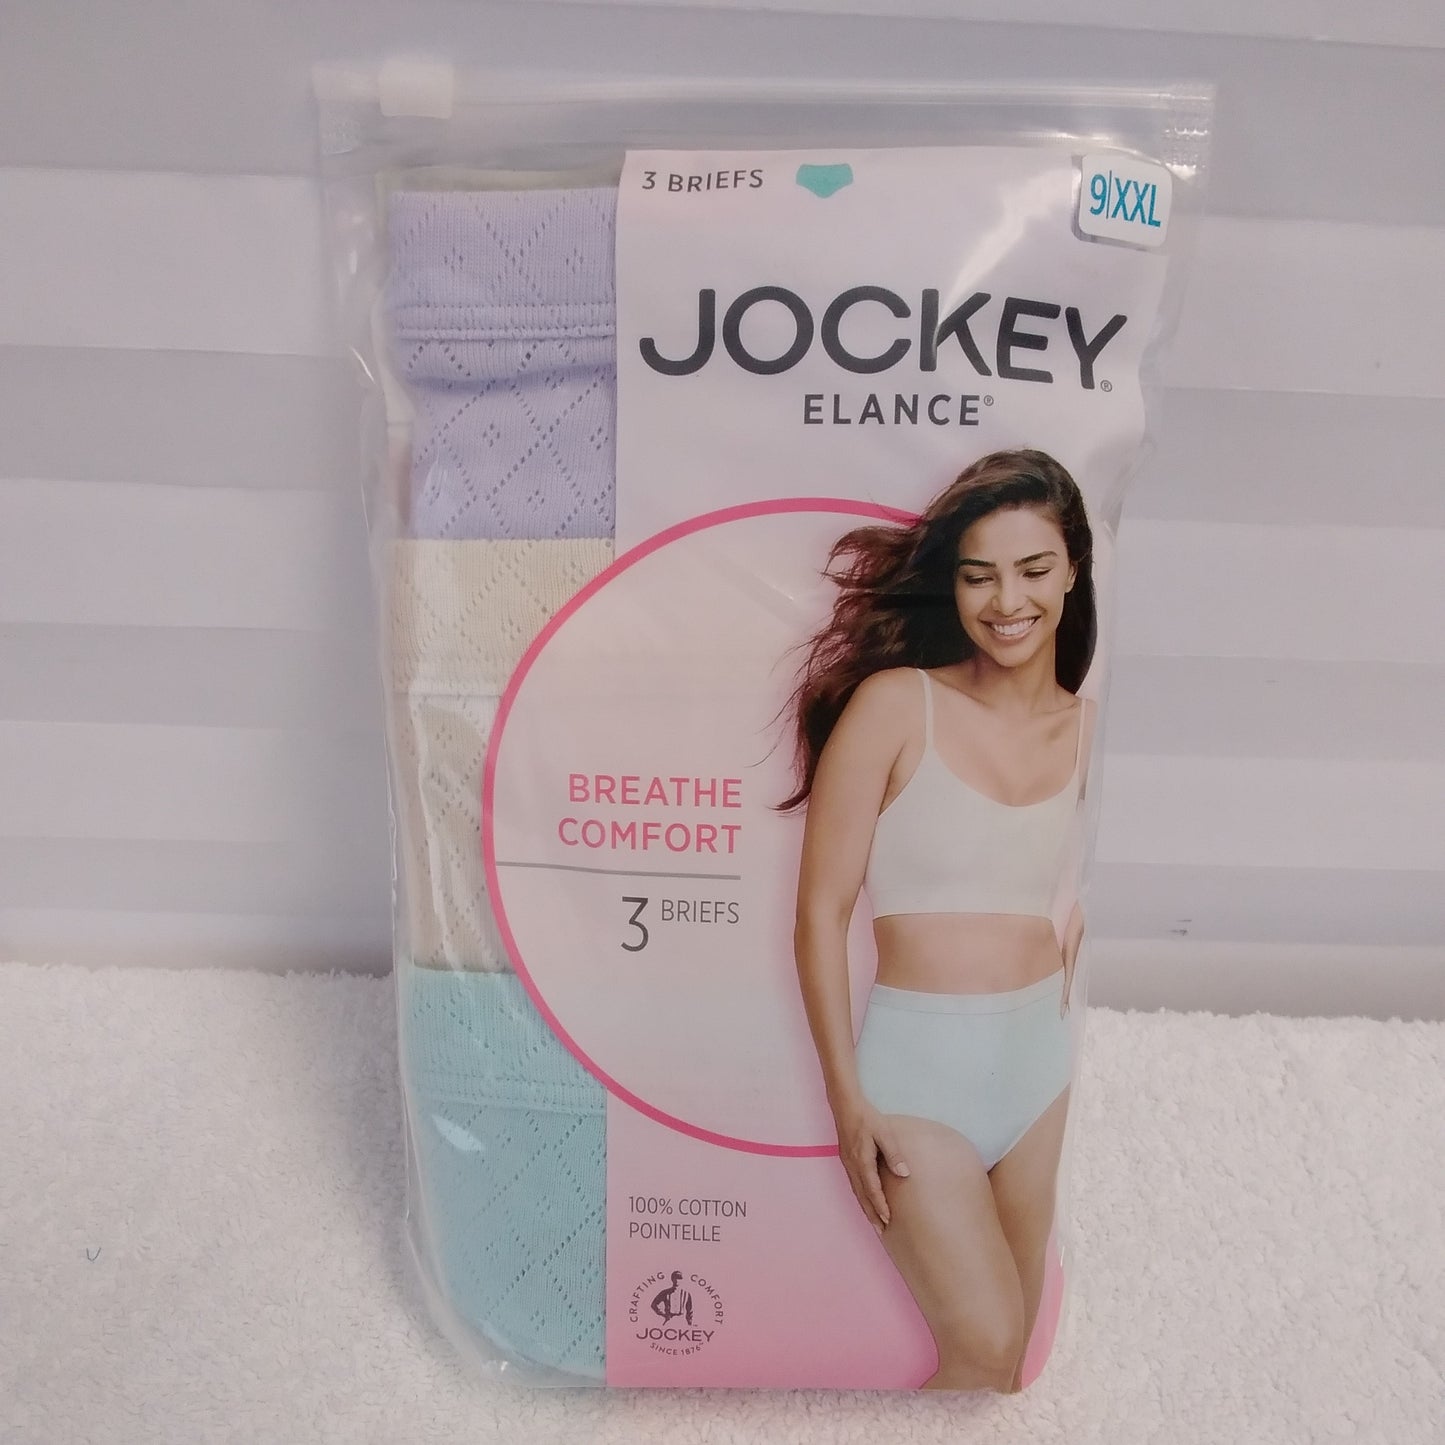 Jockey Elance Breathe Comfort 100% Cotton Brief Pantie 3 Pack Size 7 NWT